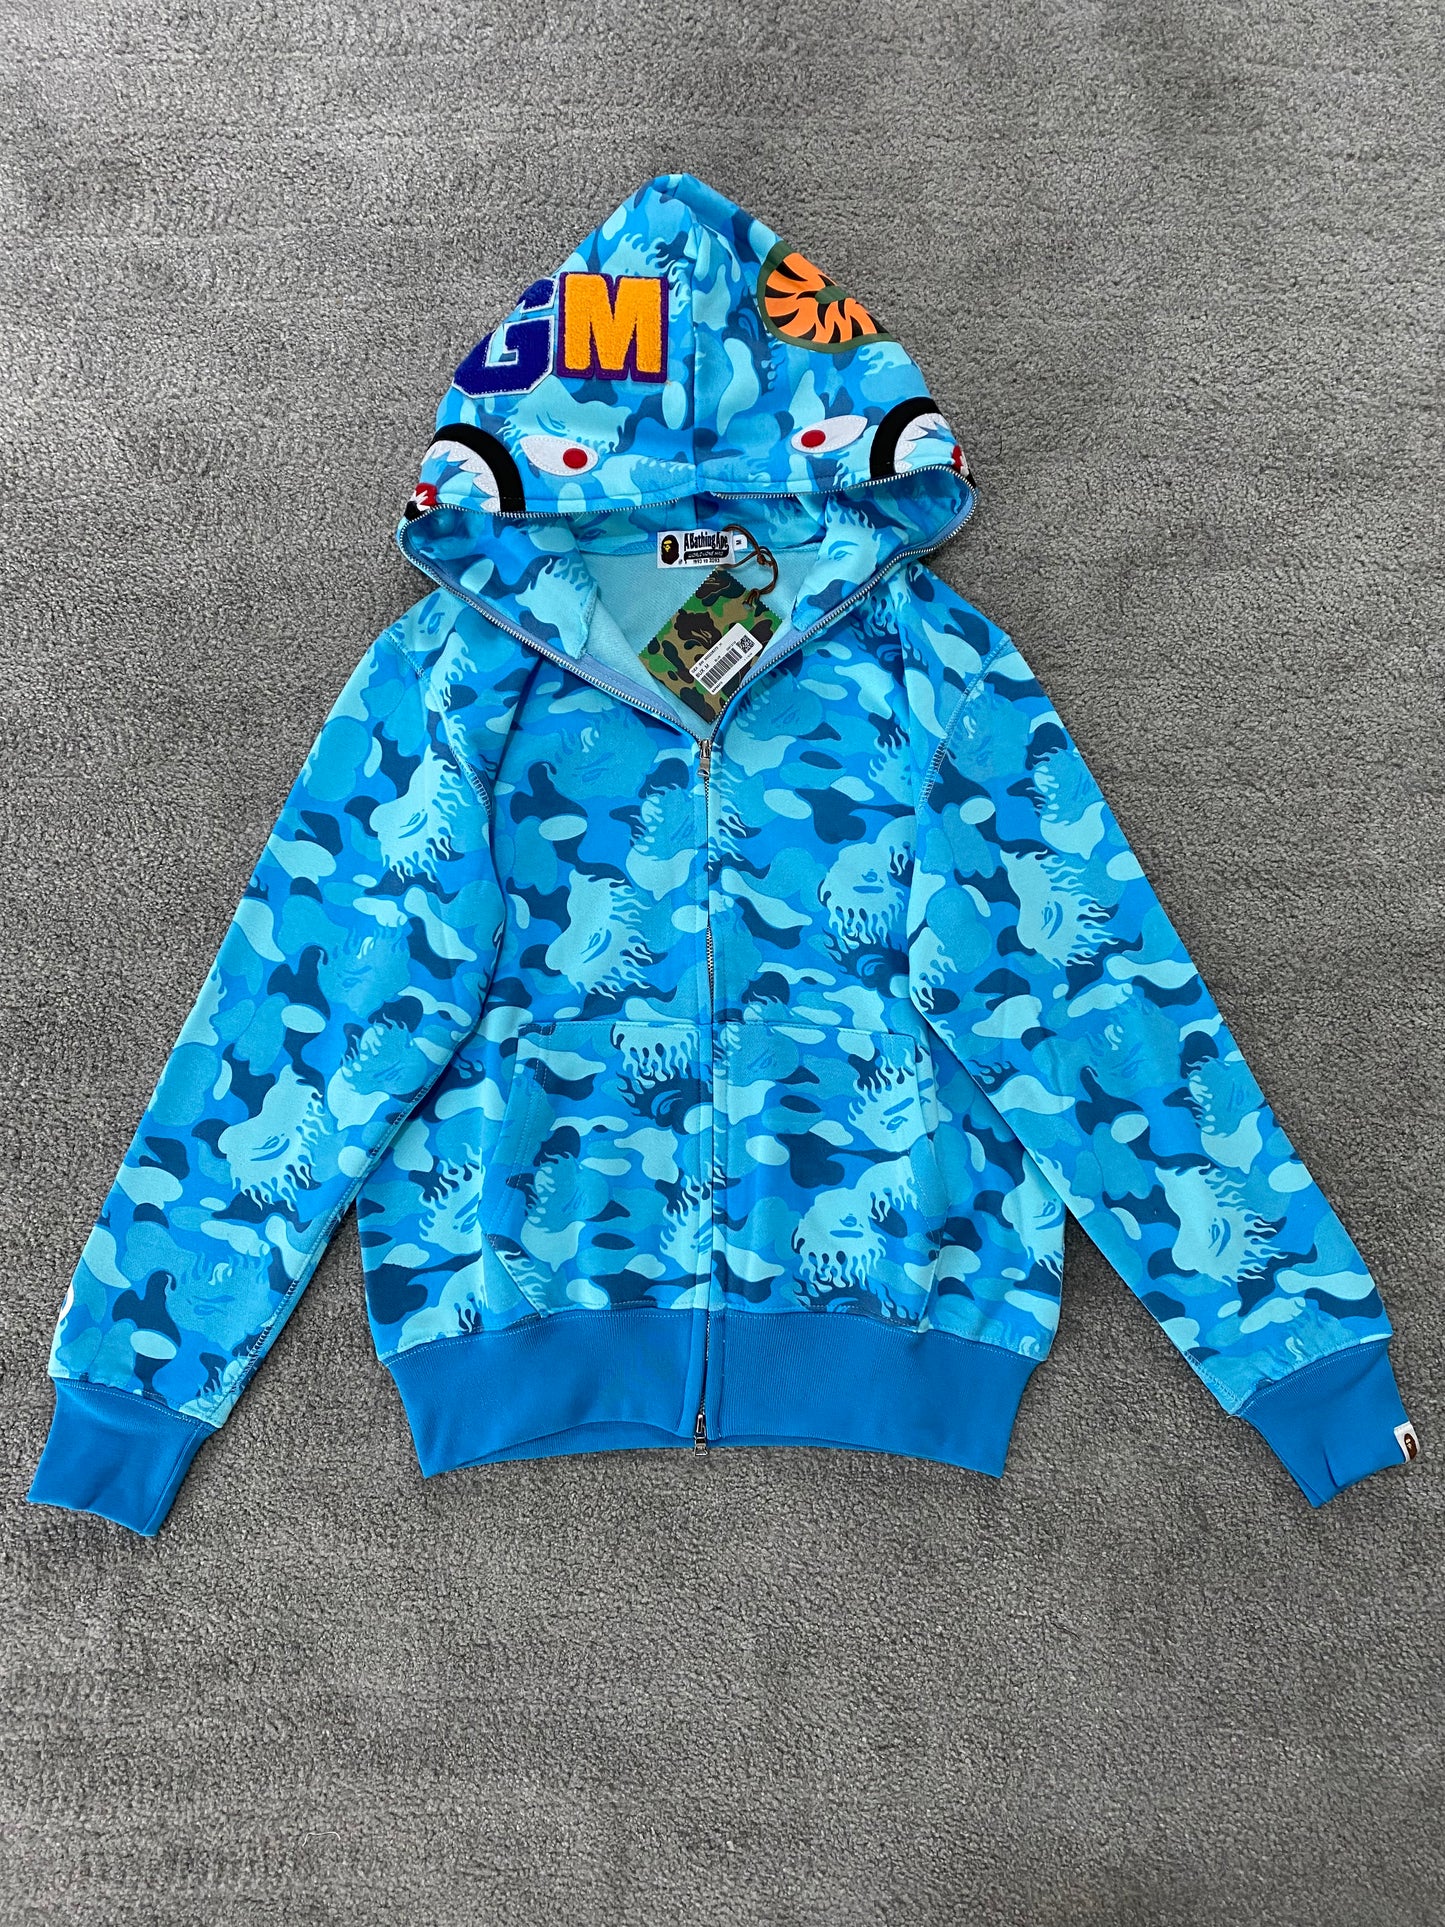 BAPE Blue Fire Camo Hoodie - Icy Clothes Ro